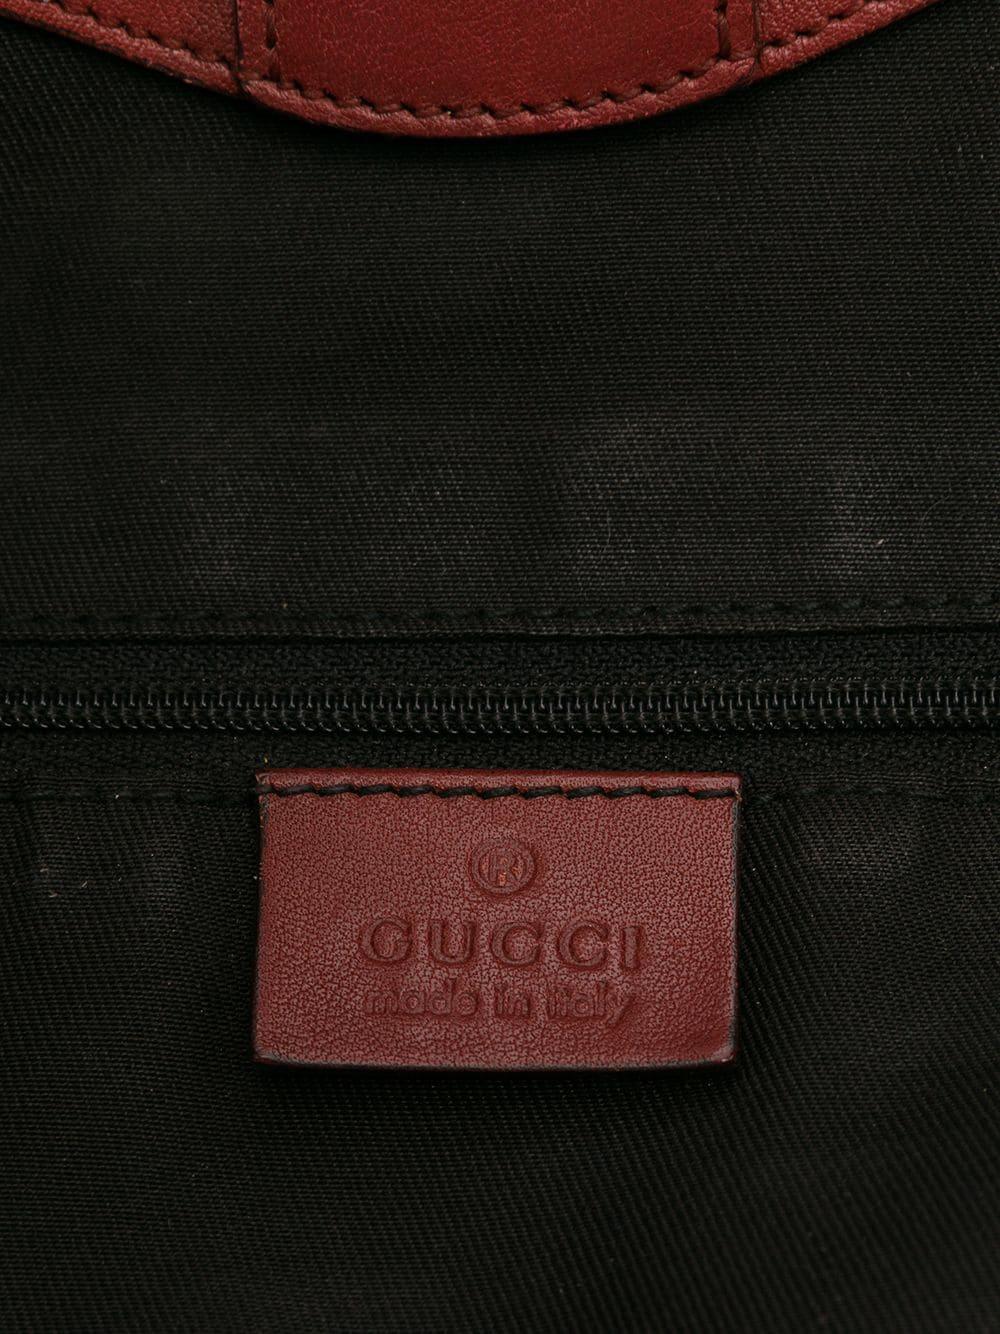 Gucci Sukey Beige Canvas Argyle Check Tote Bag In Excellent Condition In Paris, FR